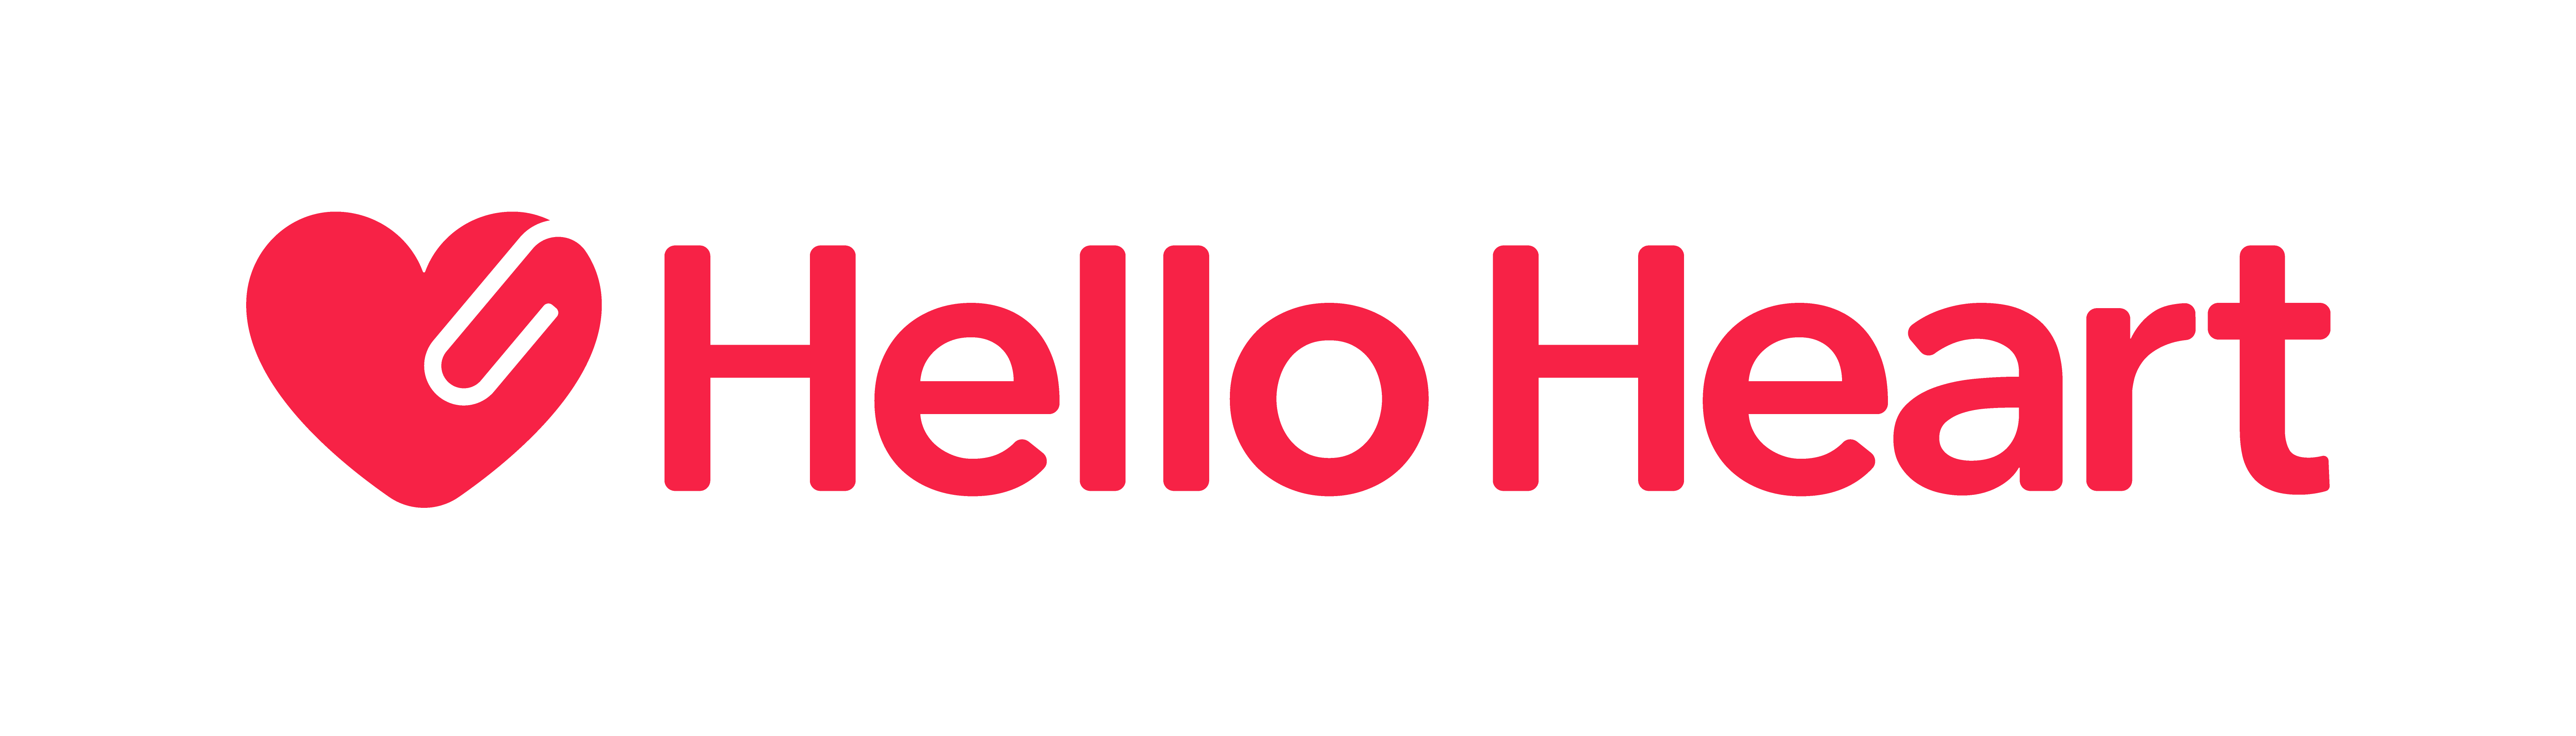 HelloHeart